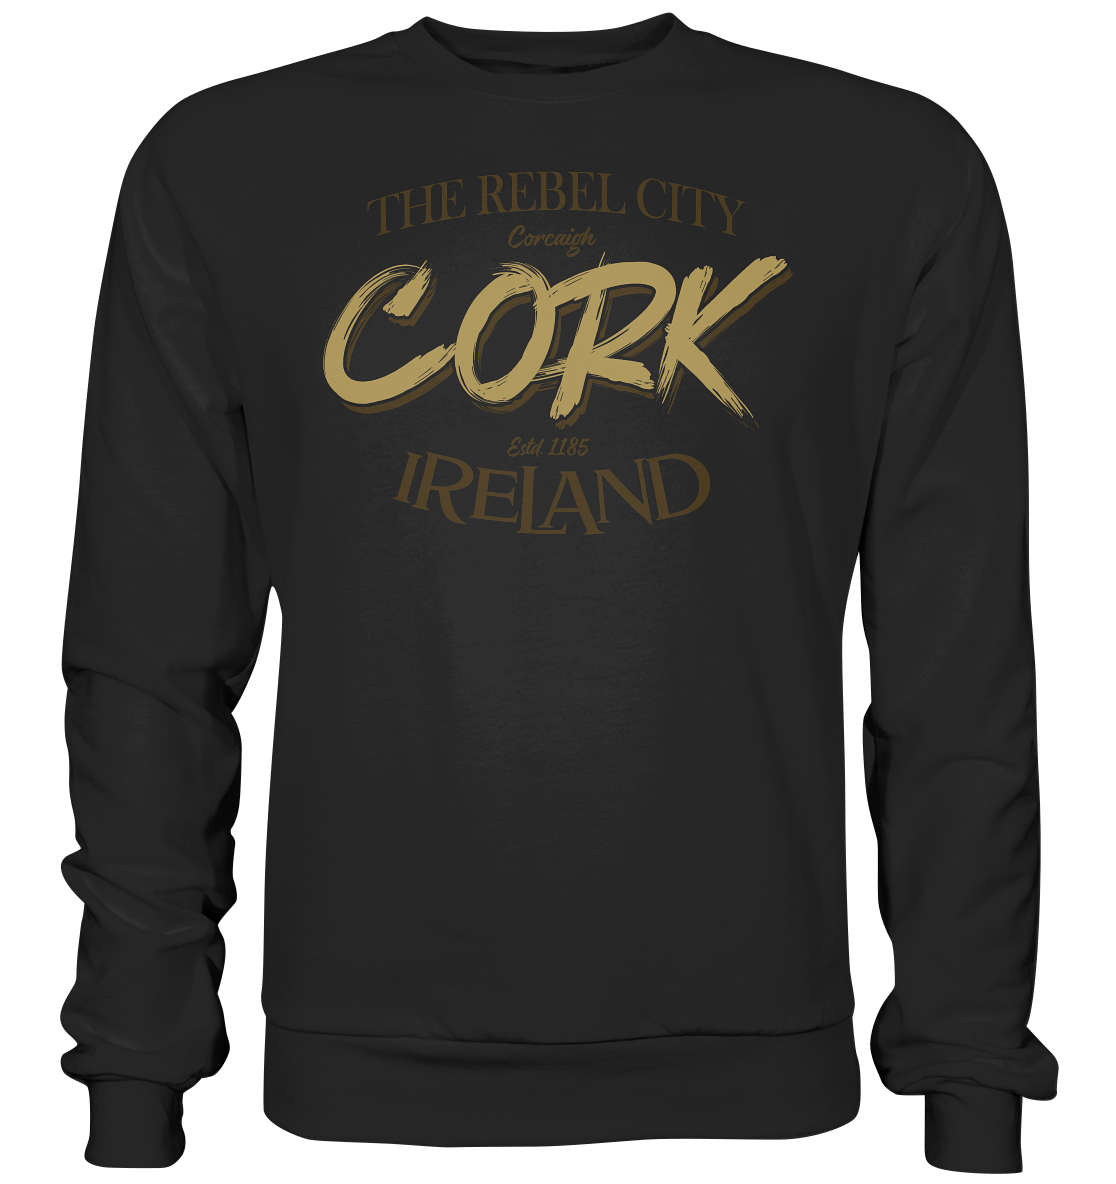 Cork "The Rebel City" - Premium Sweatshirt